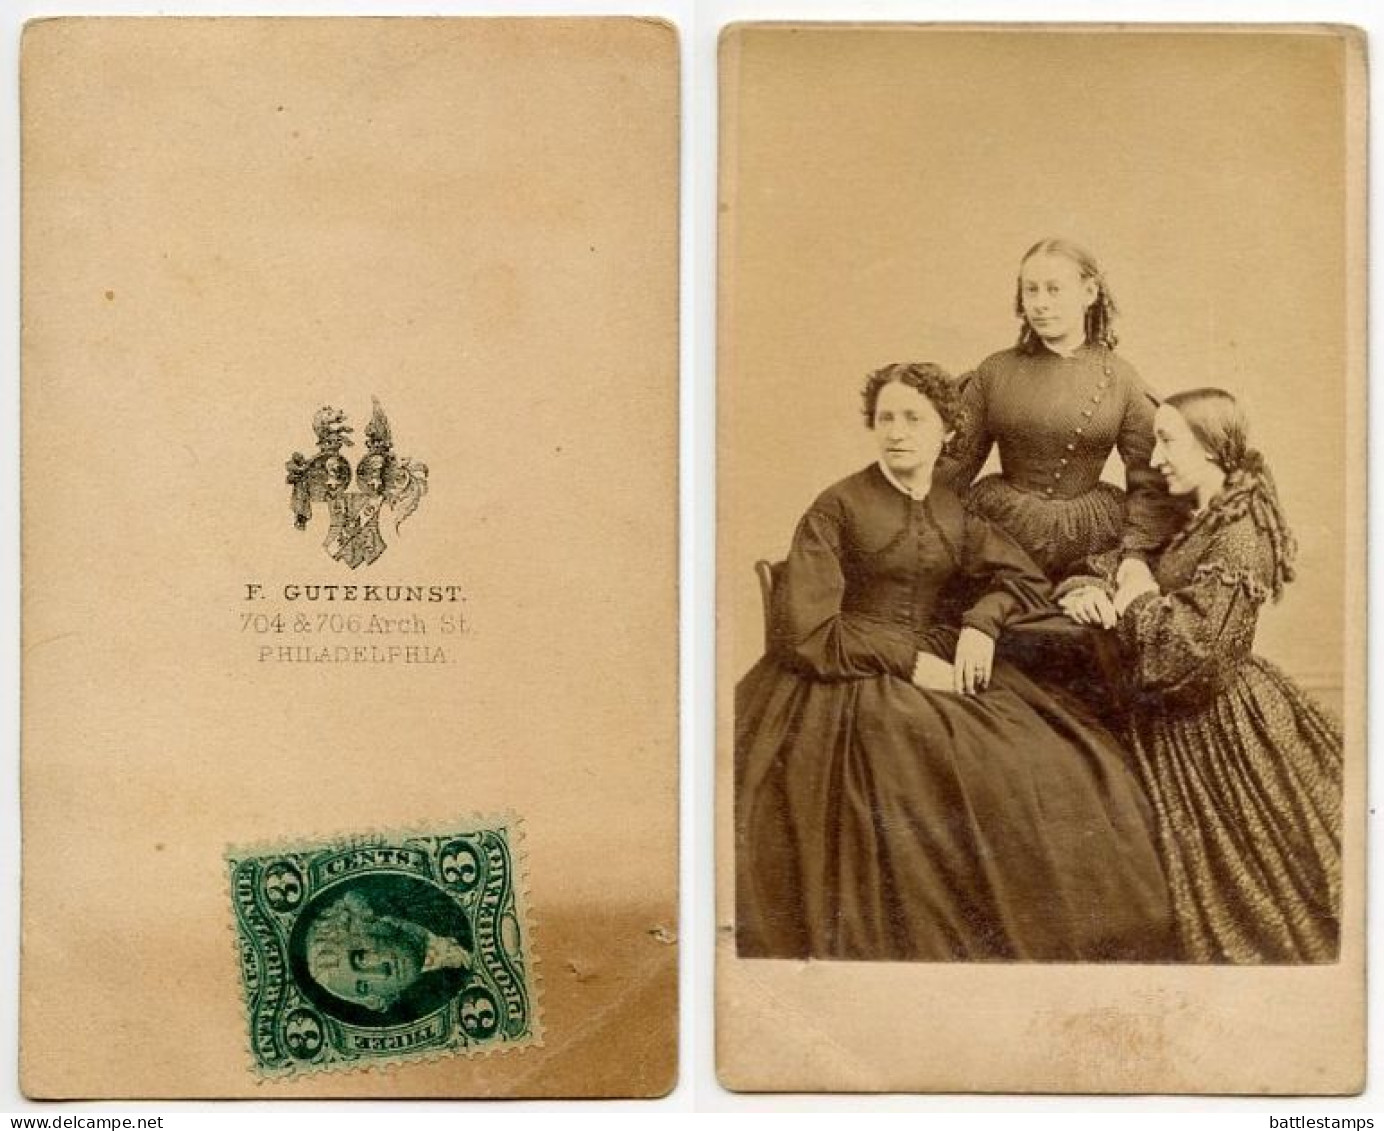 United States 1860‘s Photograph, Three Women - F. Gutekun St., Philadelphia Pennsylvania, Scott R18c Revenue Stamp - Revenues